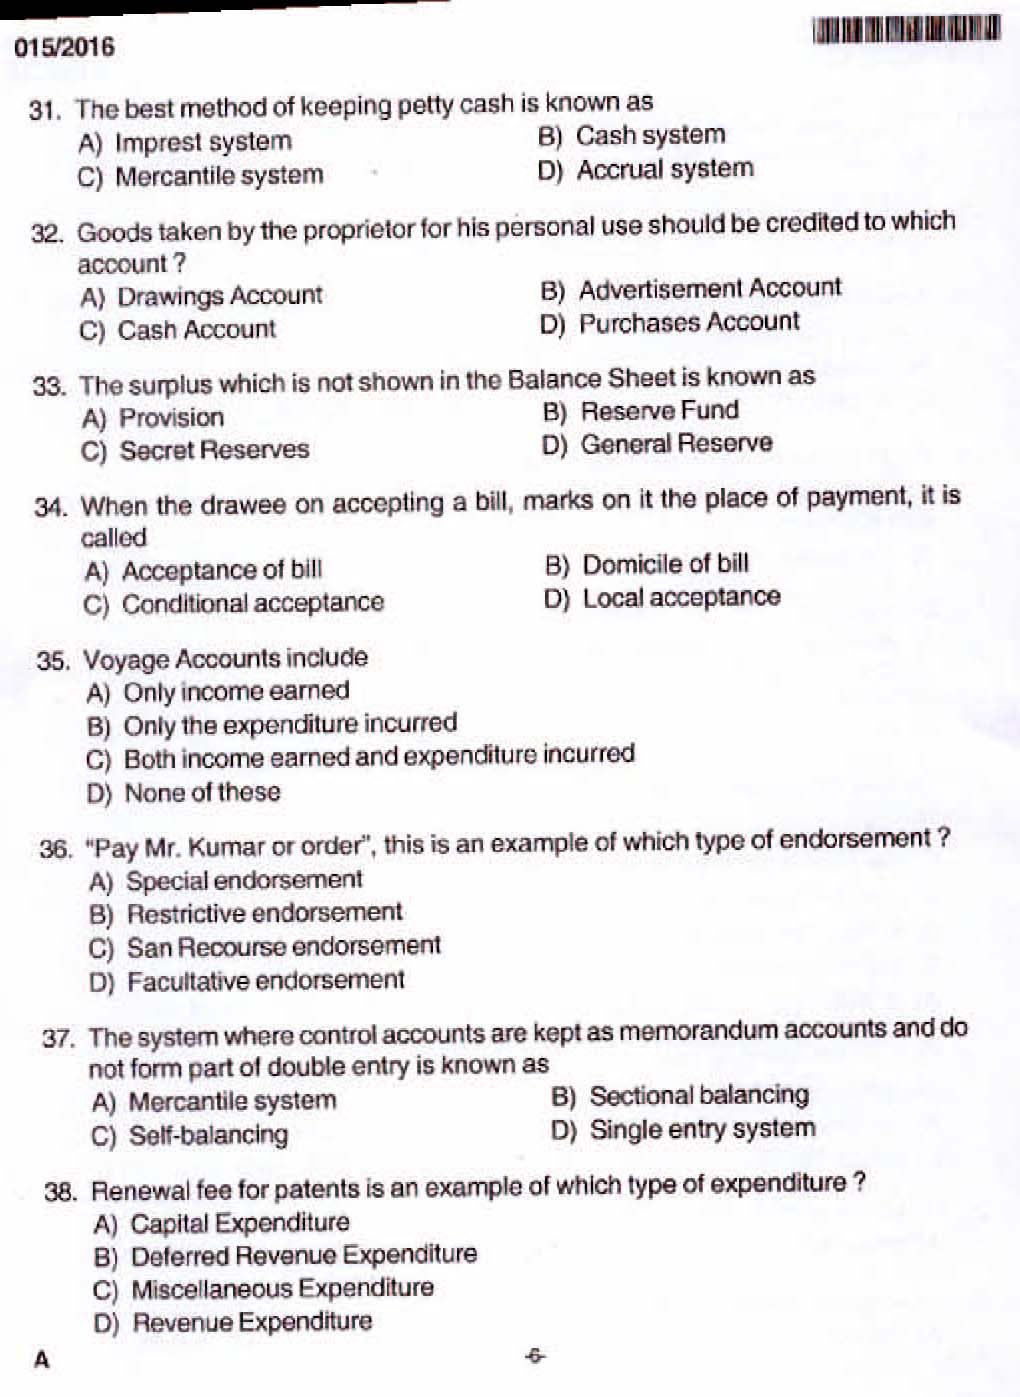 Kerala PSC Divisional Accountant OMR Exam 2016 Question Paper Code 0152016 4